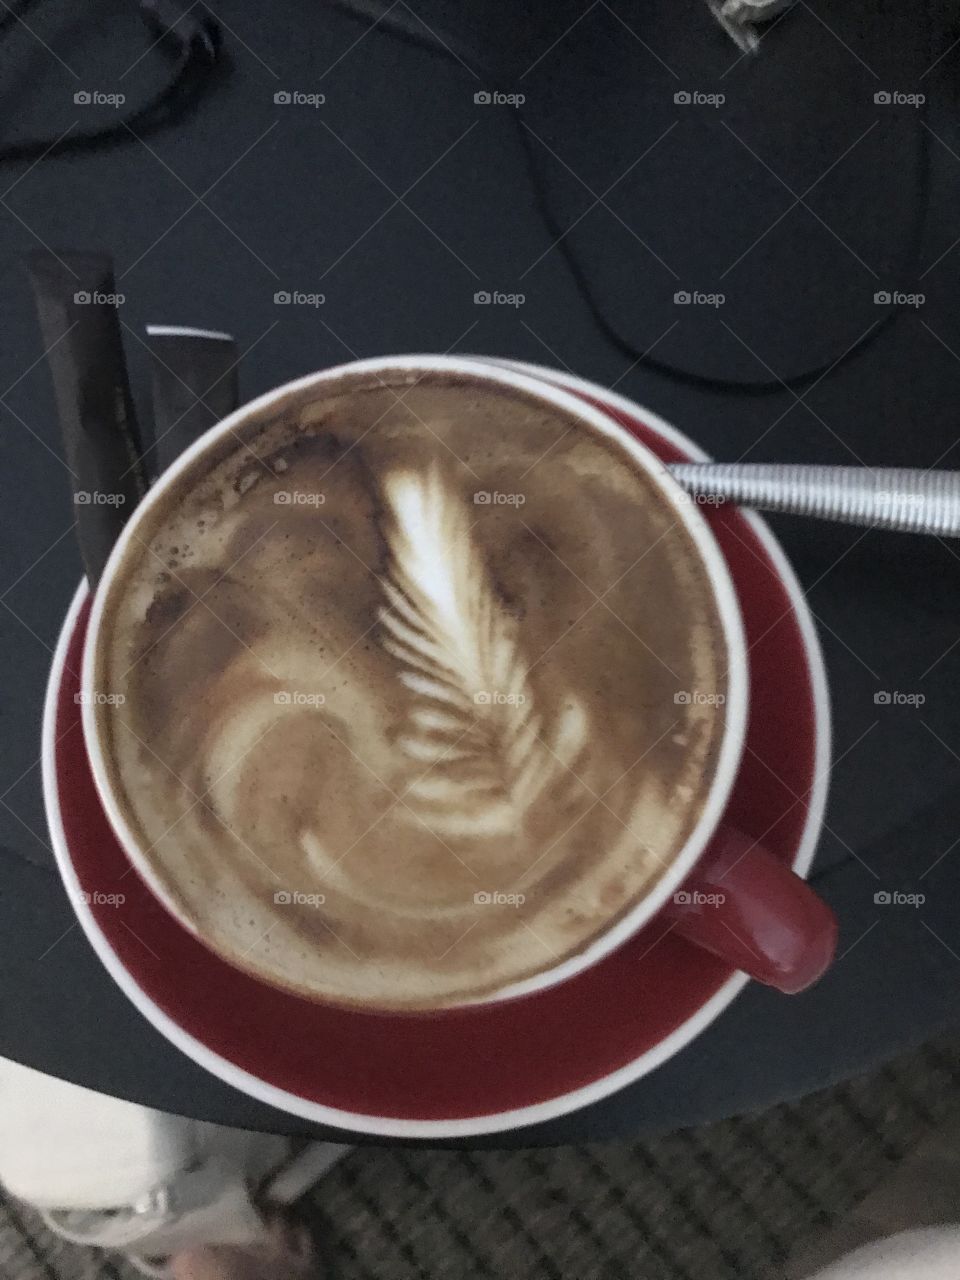 Coffee latte 